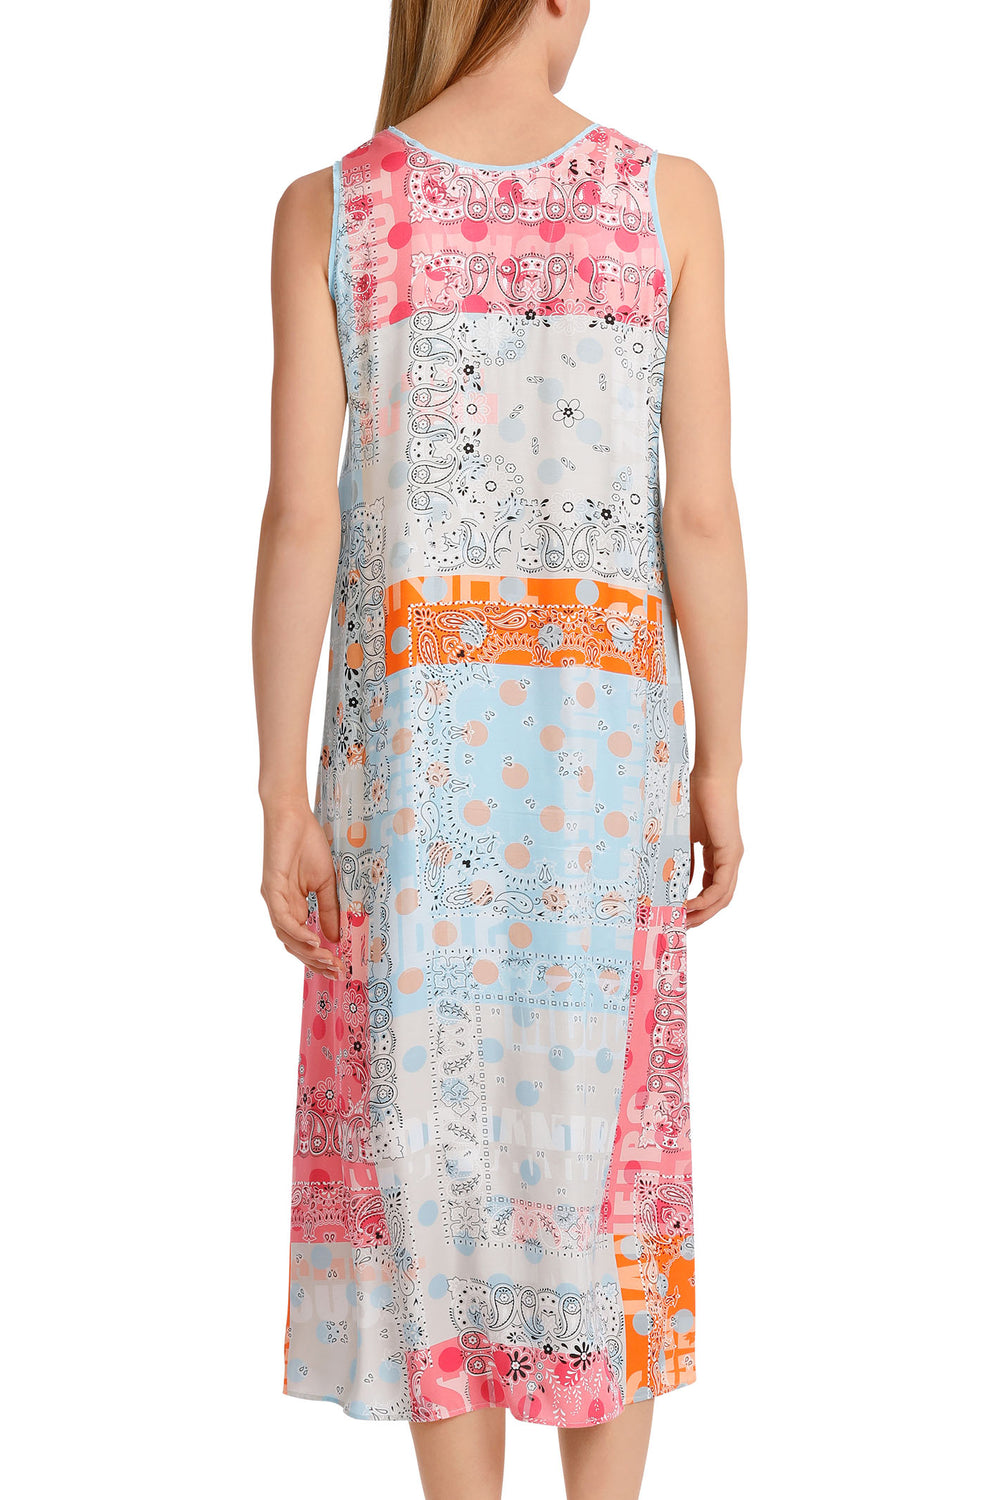 Marc Cain WS 21.38 W07 238 Blue Sleeveless Colourful Summer Dress - Olivia Grace Fashion